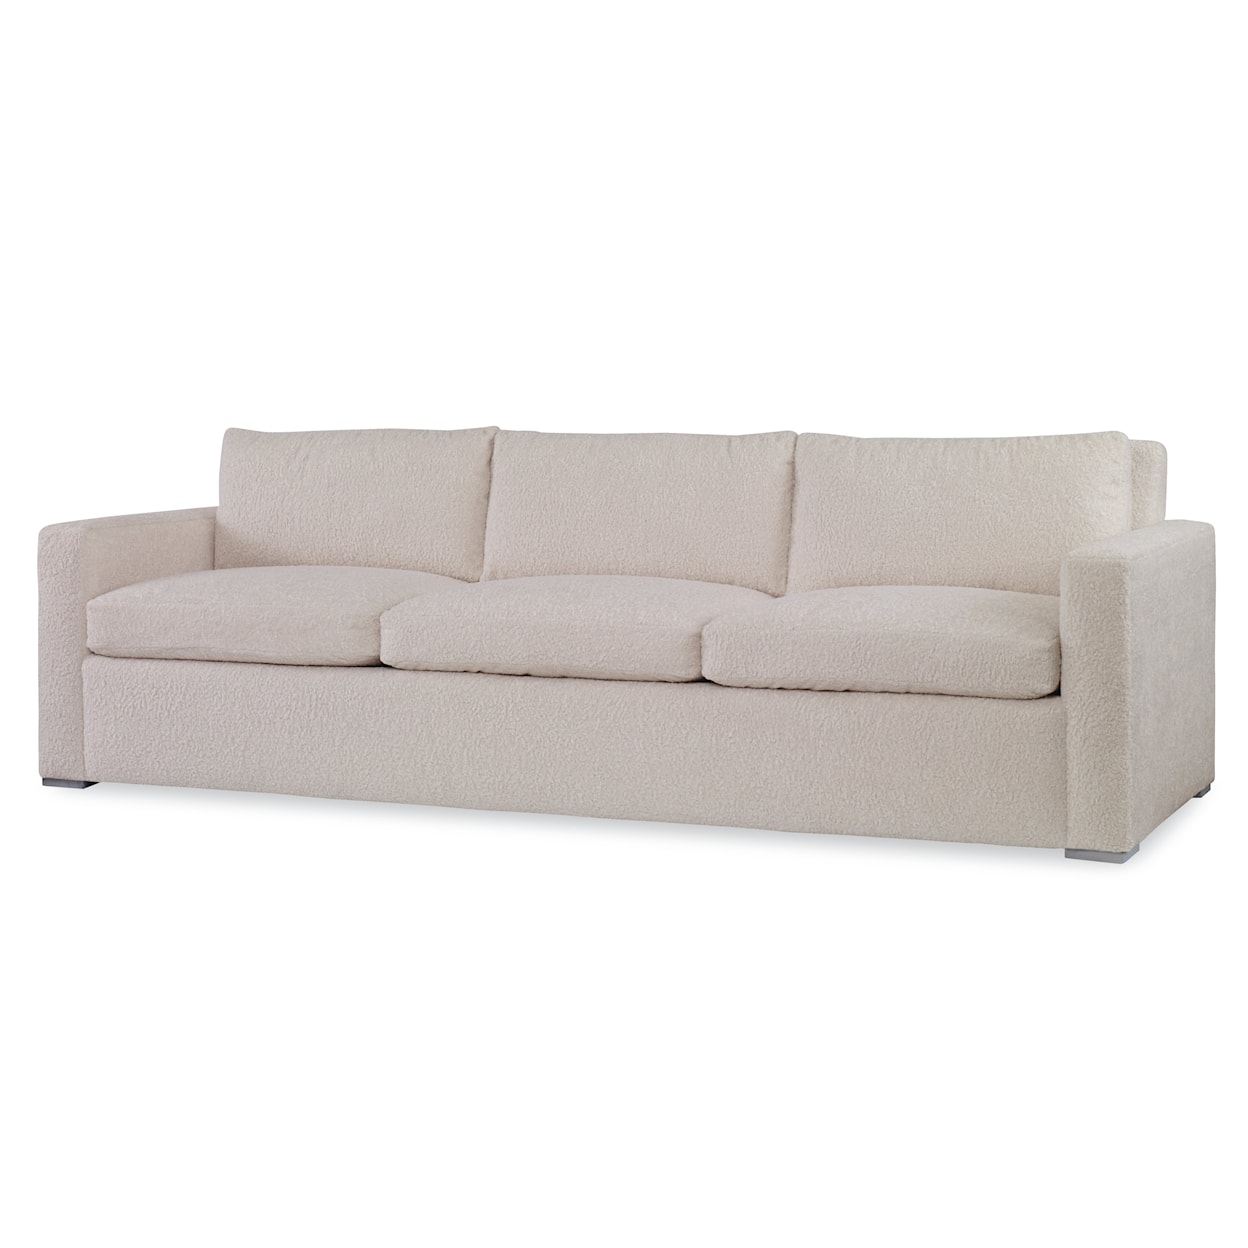 Century Windsor Smith Upholstery Palladium Sofa